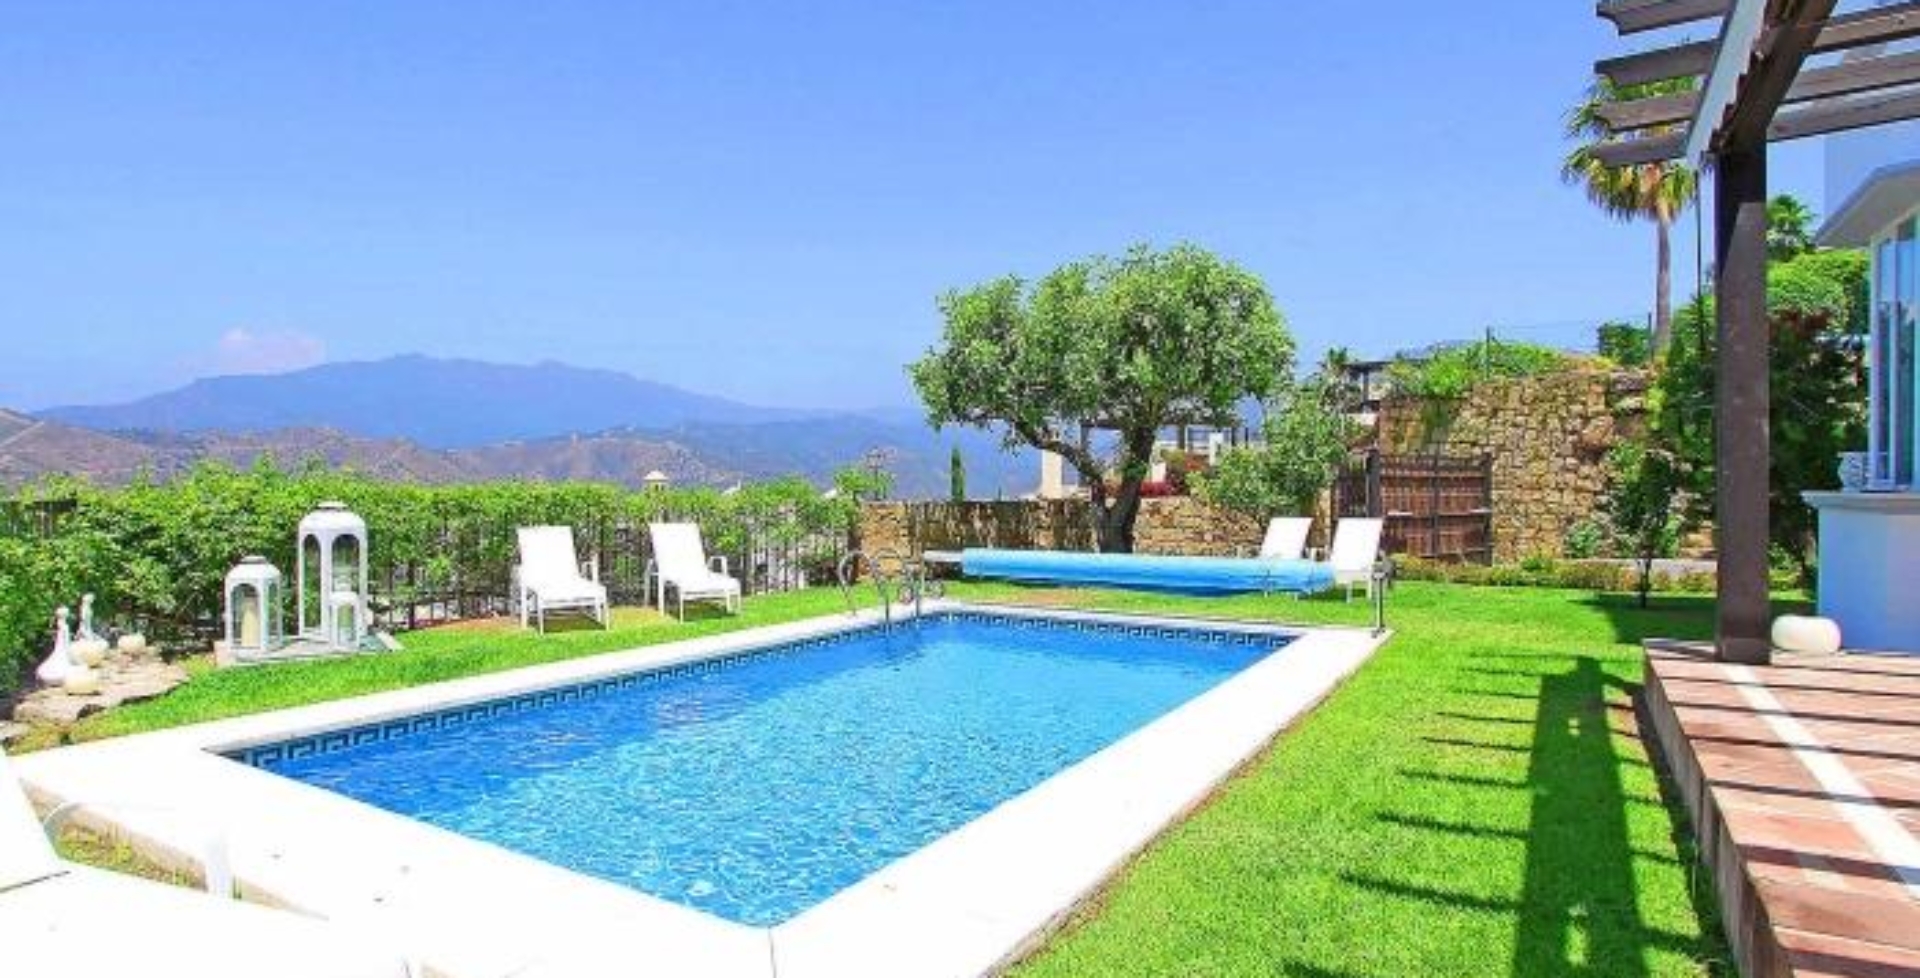 Marbella family villa 3 bedrooms pool and gardens